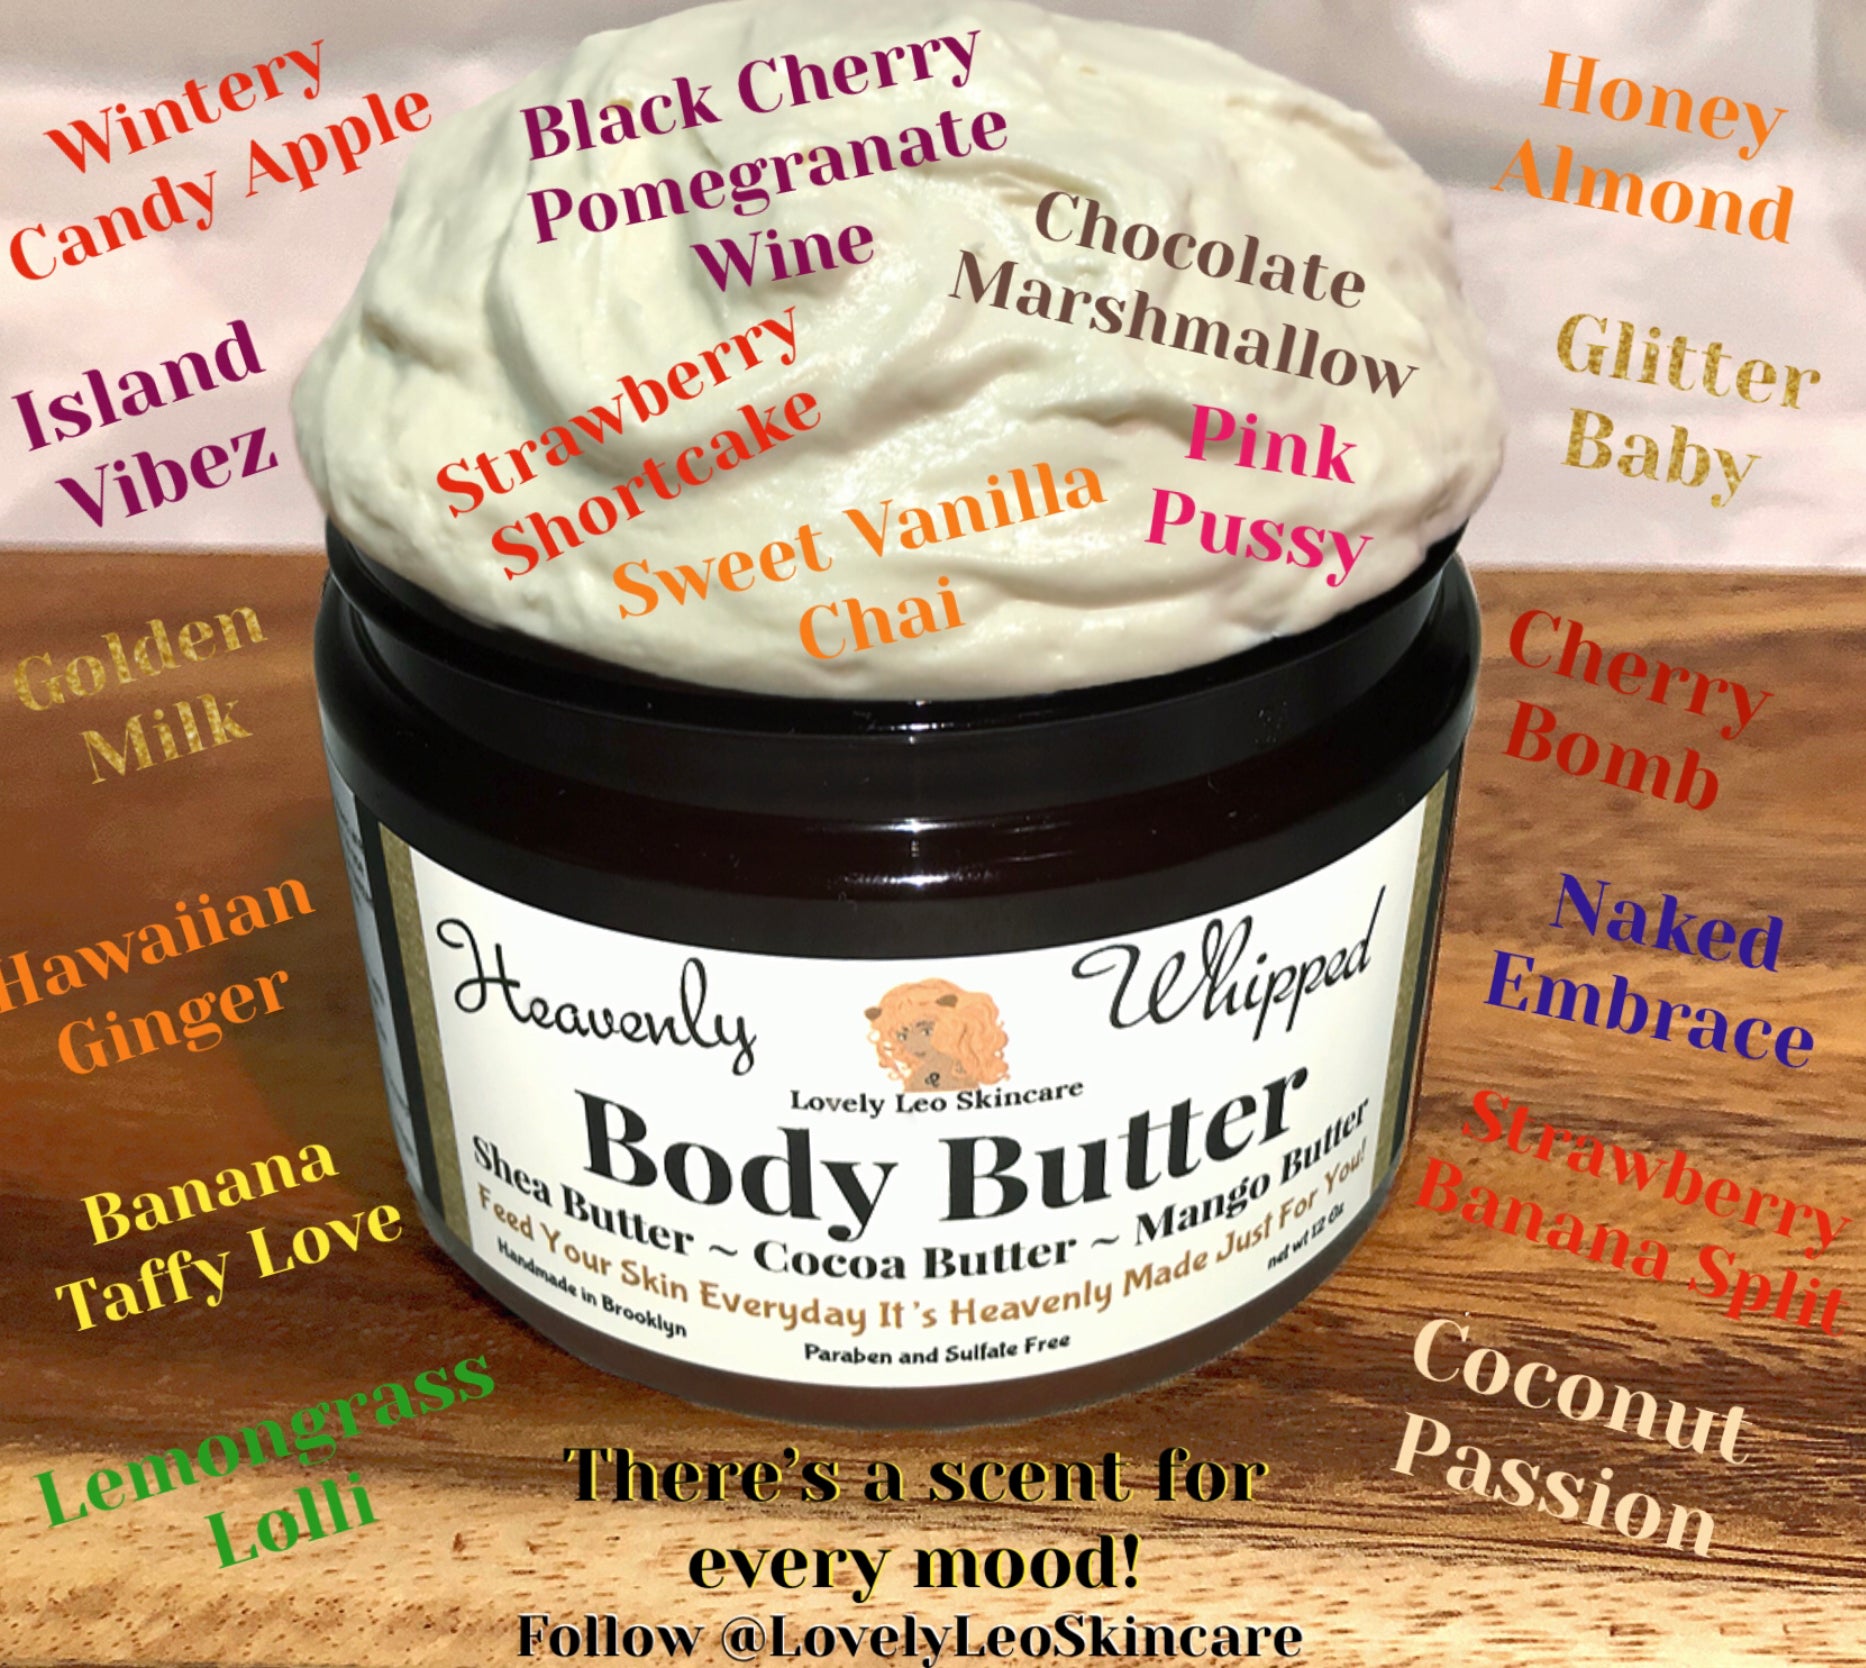 Birthday Cake Whipped Body Butter – Pure Honey Cosmetics